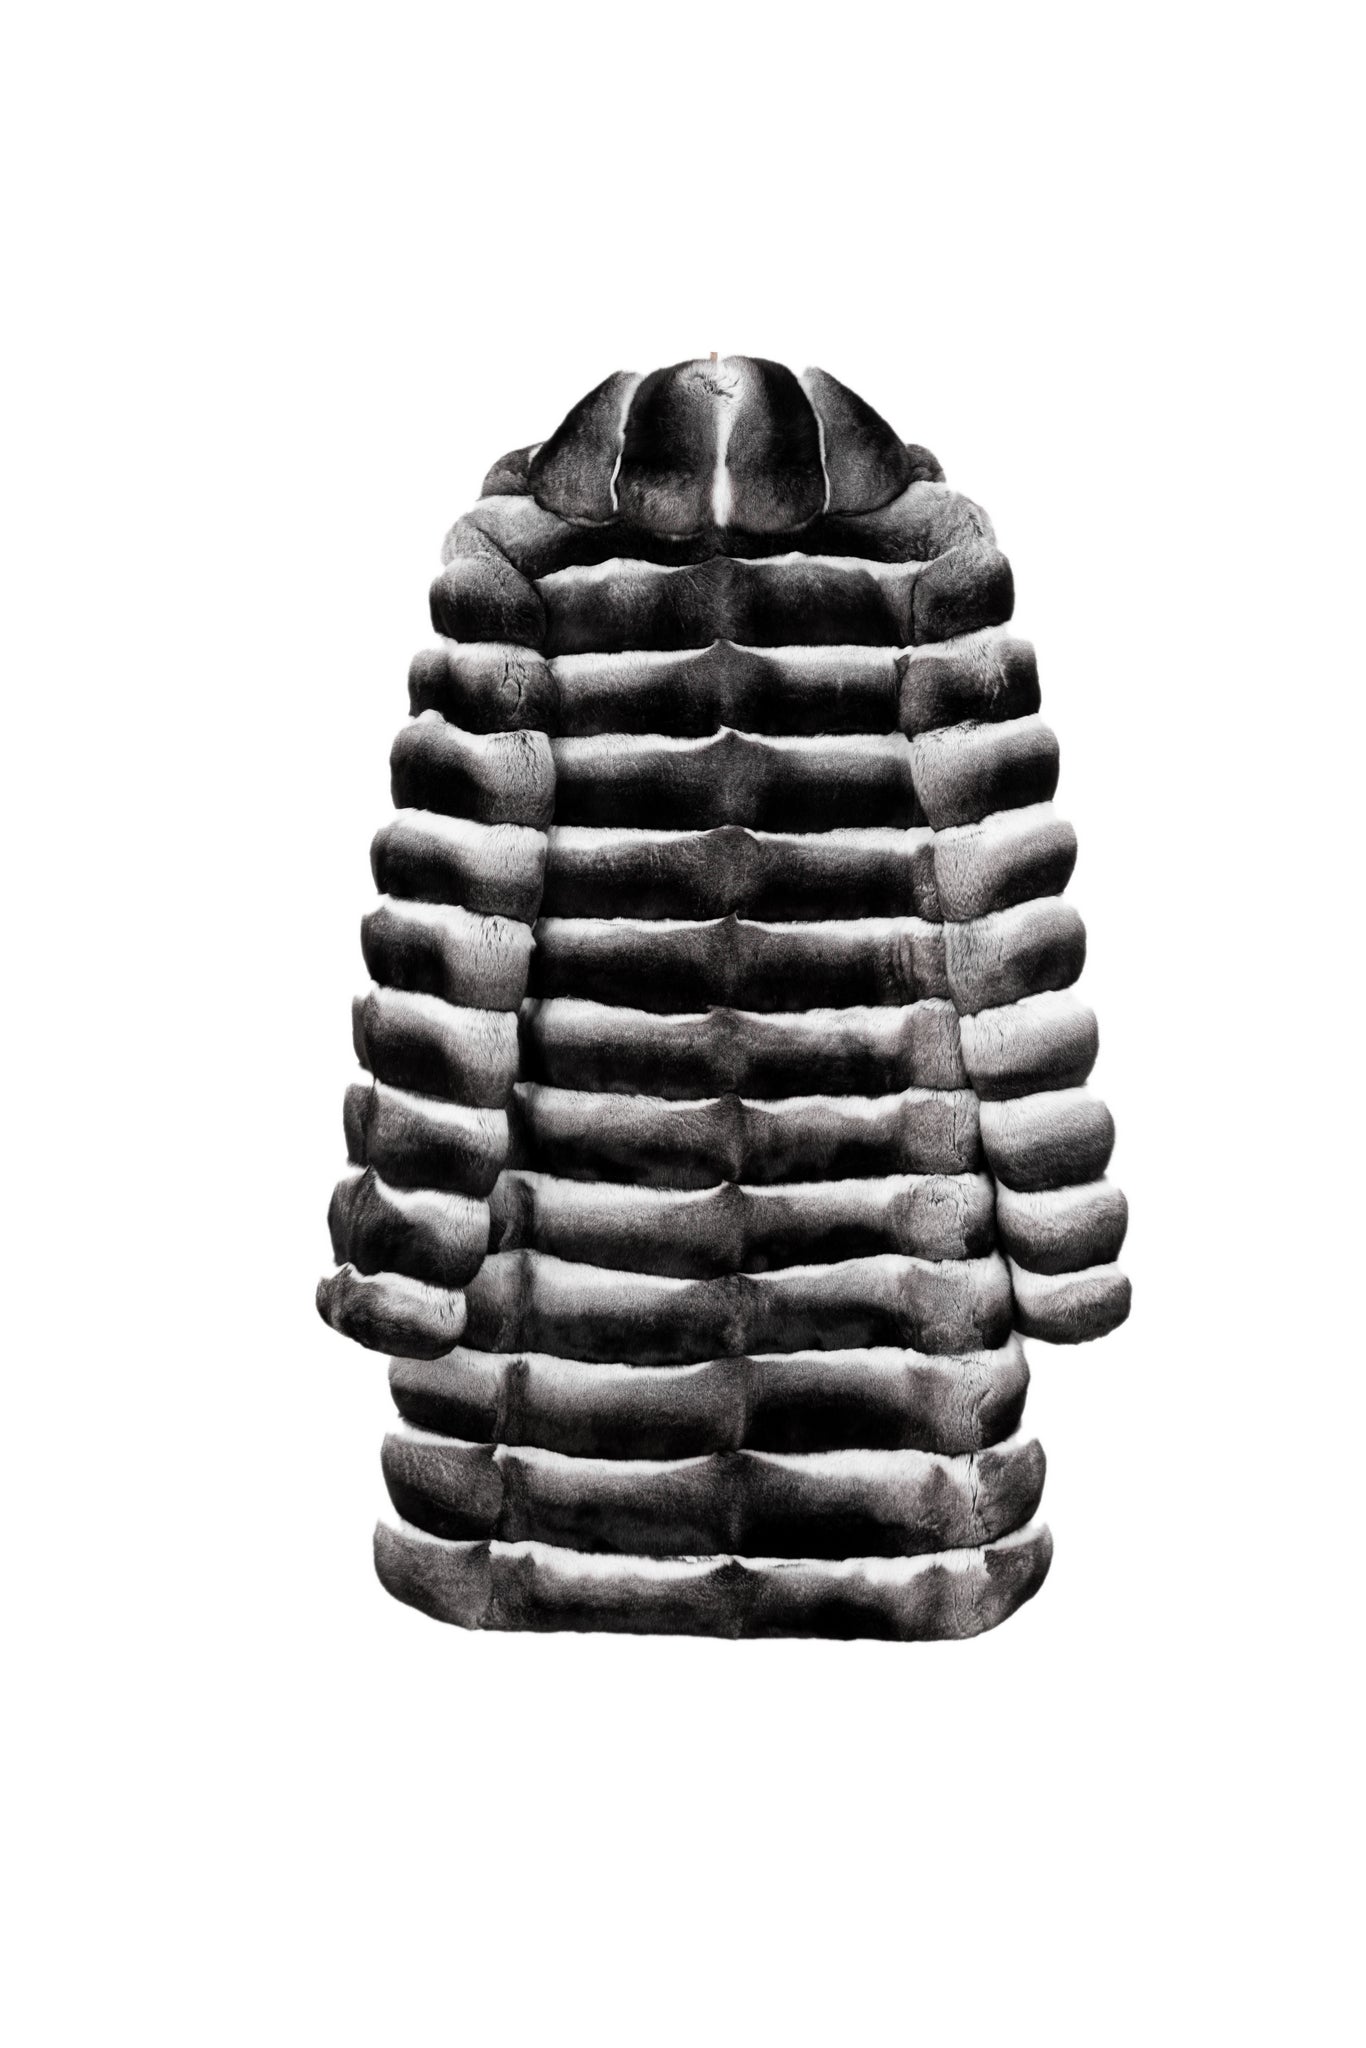 Stylish and Warm: Fashion Chinchilla Fur Coat for Women